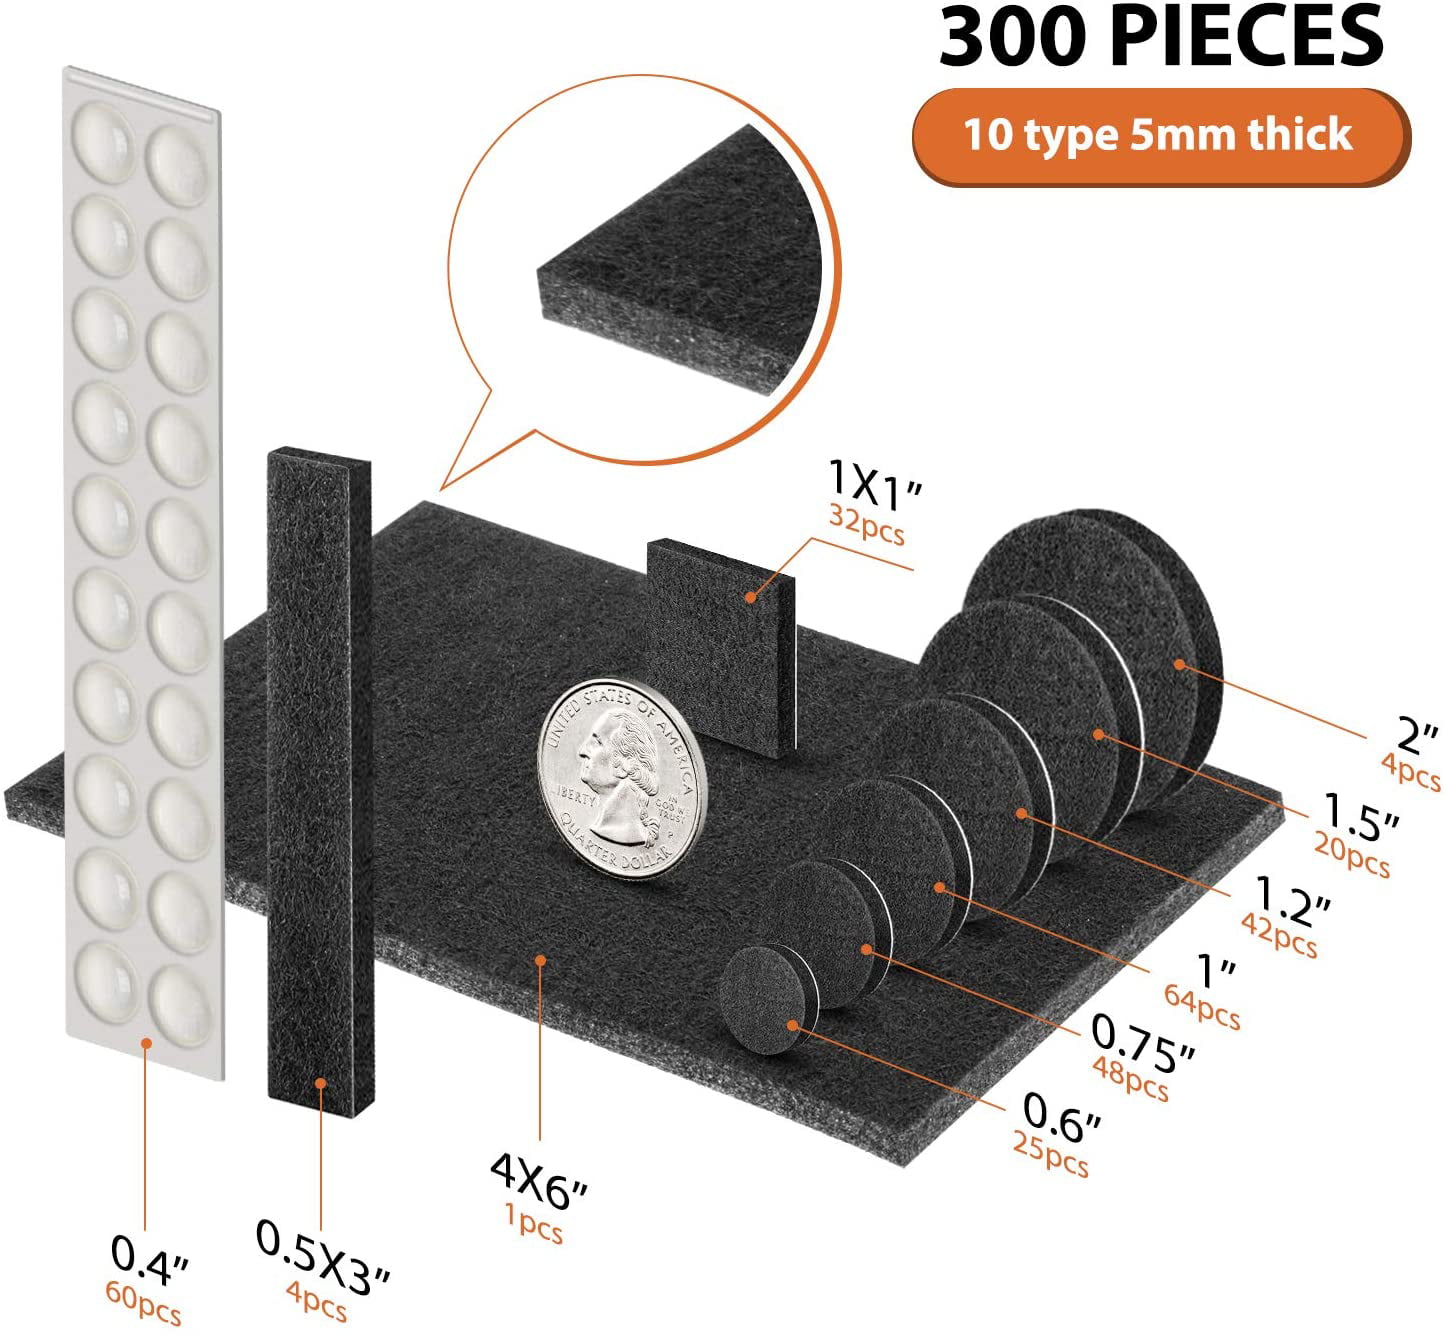 300PCS 5mm Thick Furniture Pads Felt Self Adhesive Anti Scratch Floor Protectors 